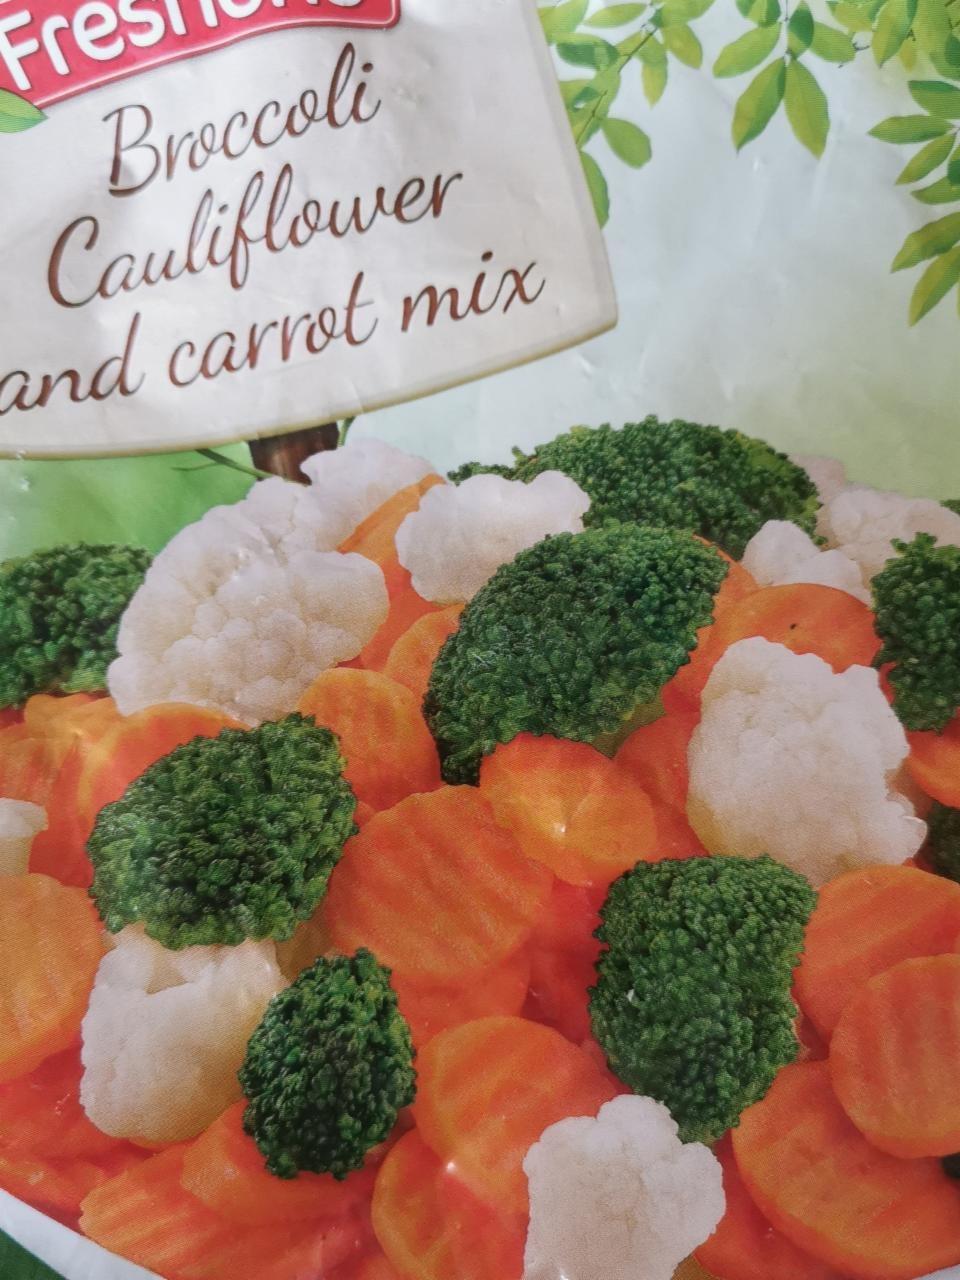 Képek - Broccoli Cauliflower and carrot mix Freshona